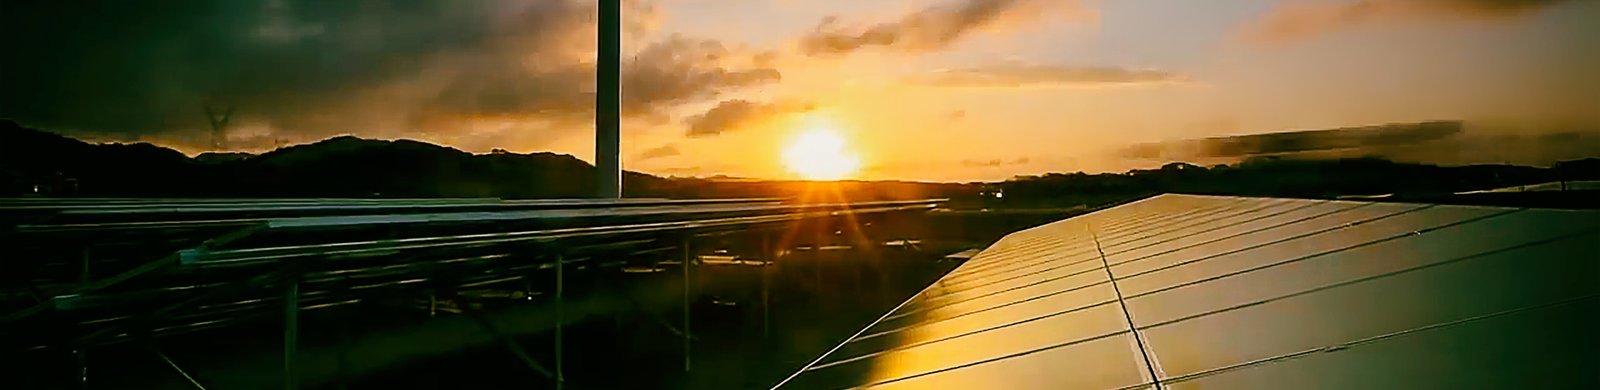 Ingenieria sostenible panel solar.jpg